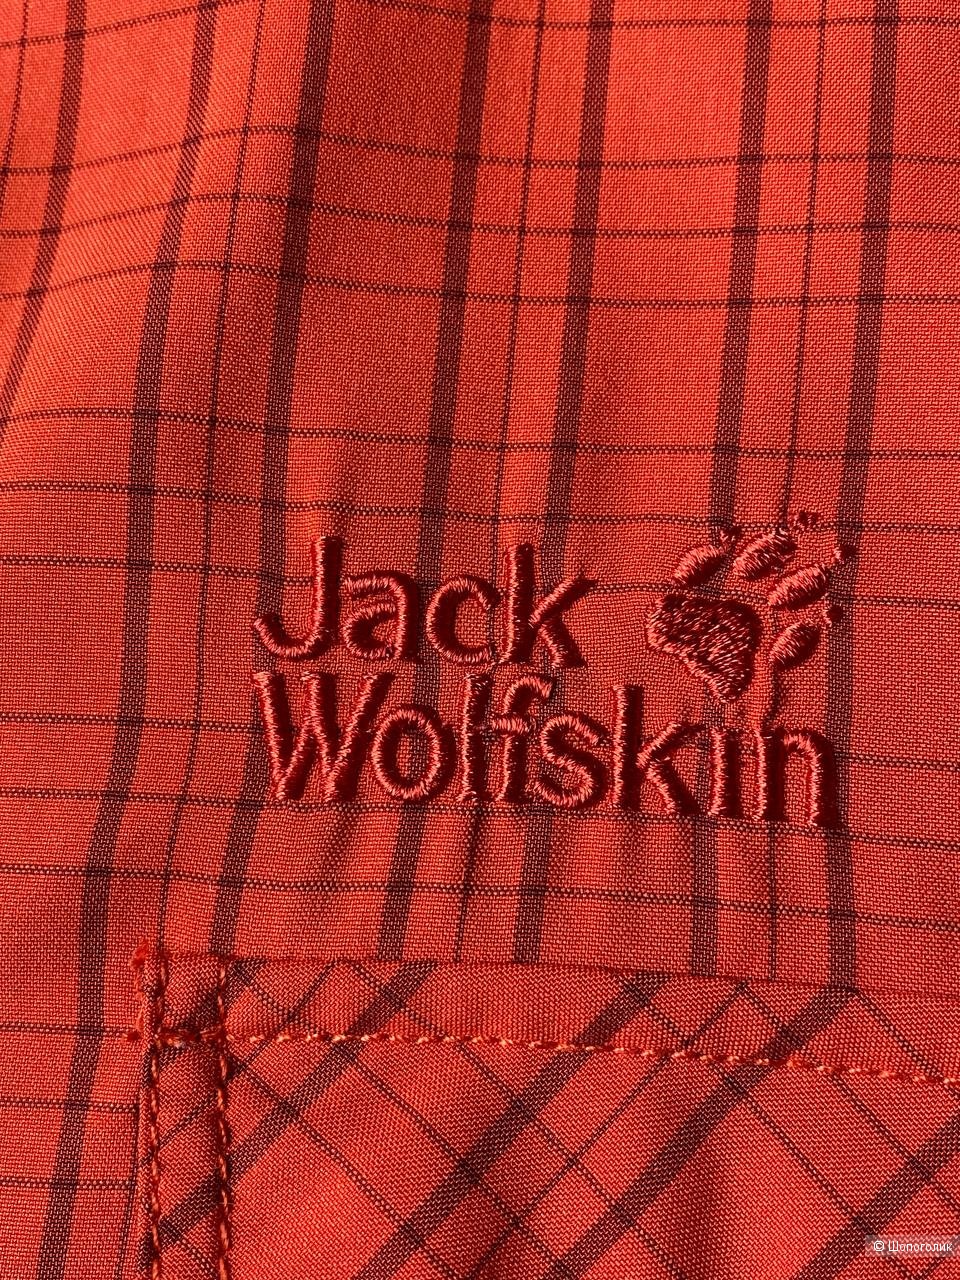 Рубашка Jack Wolfskin, размер: XL